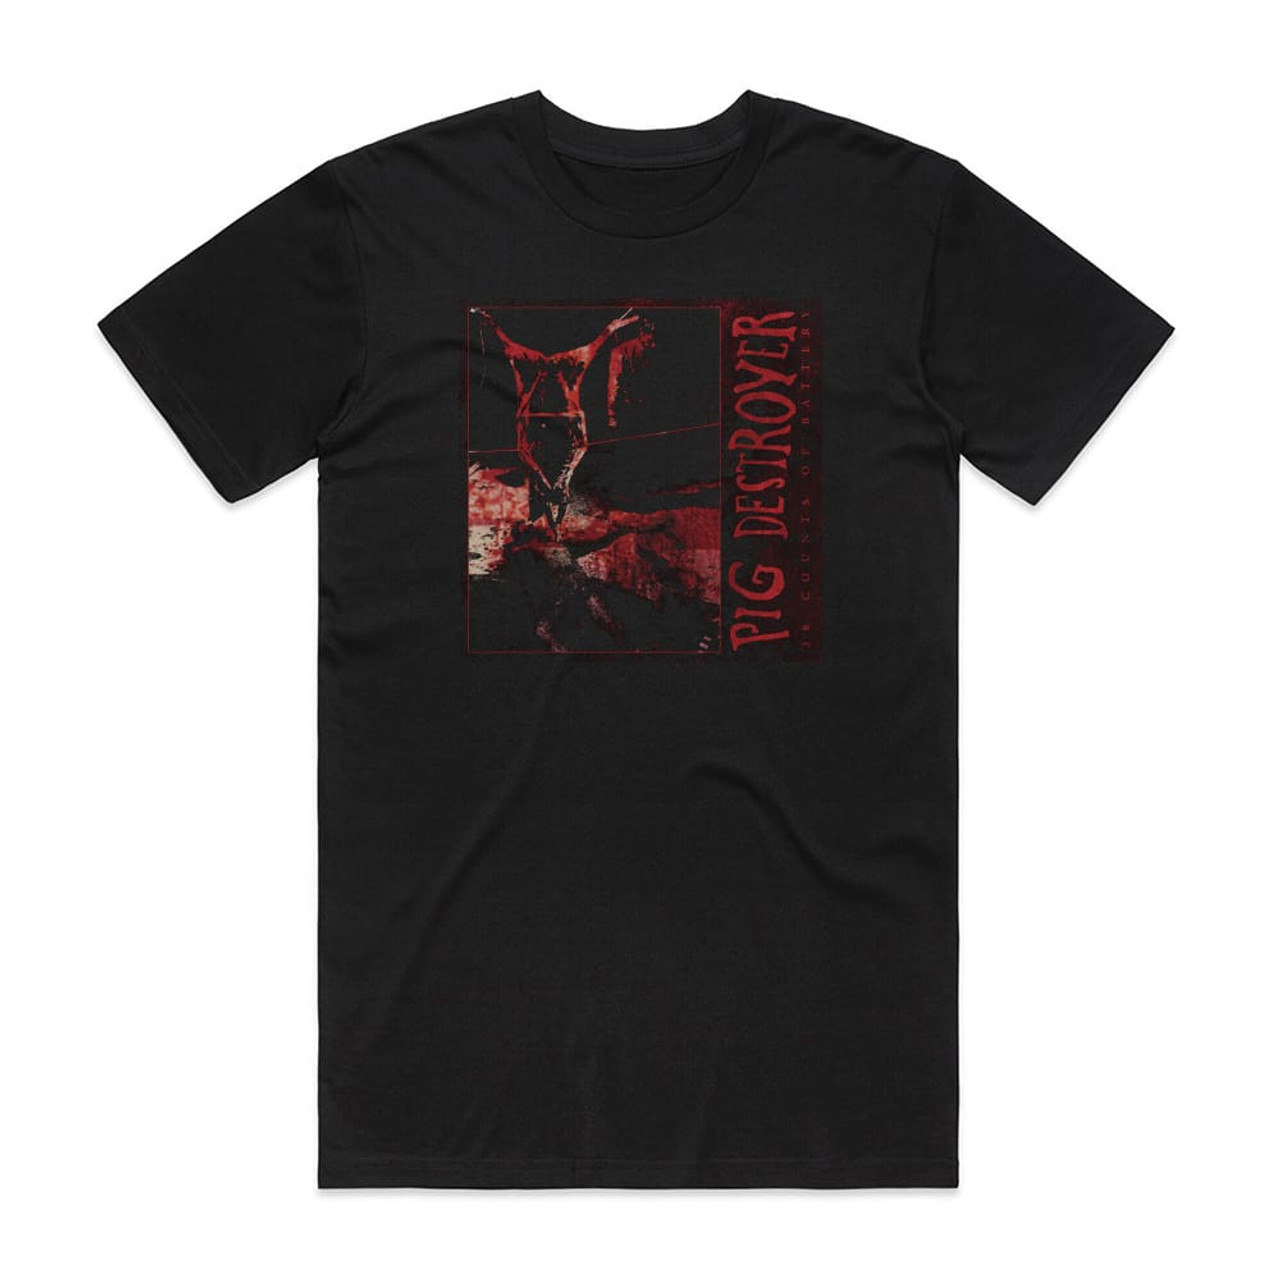 Pig Destroyer 38 Counts Of Battery Album Cover T-Shirt Black